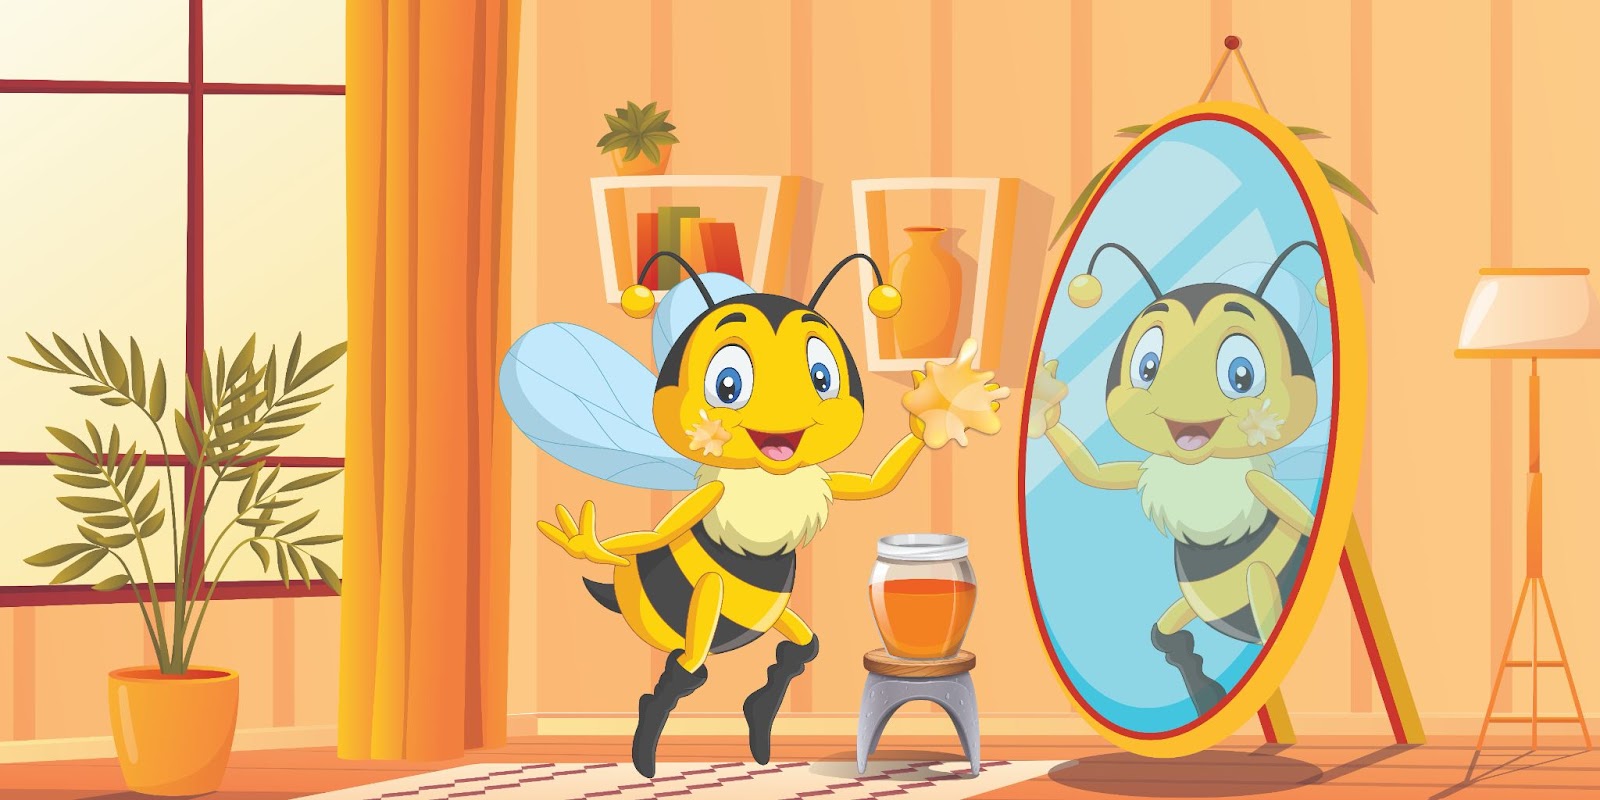 Honeybee Enchanting the Cosmetics Industry